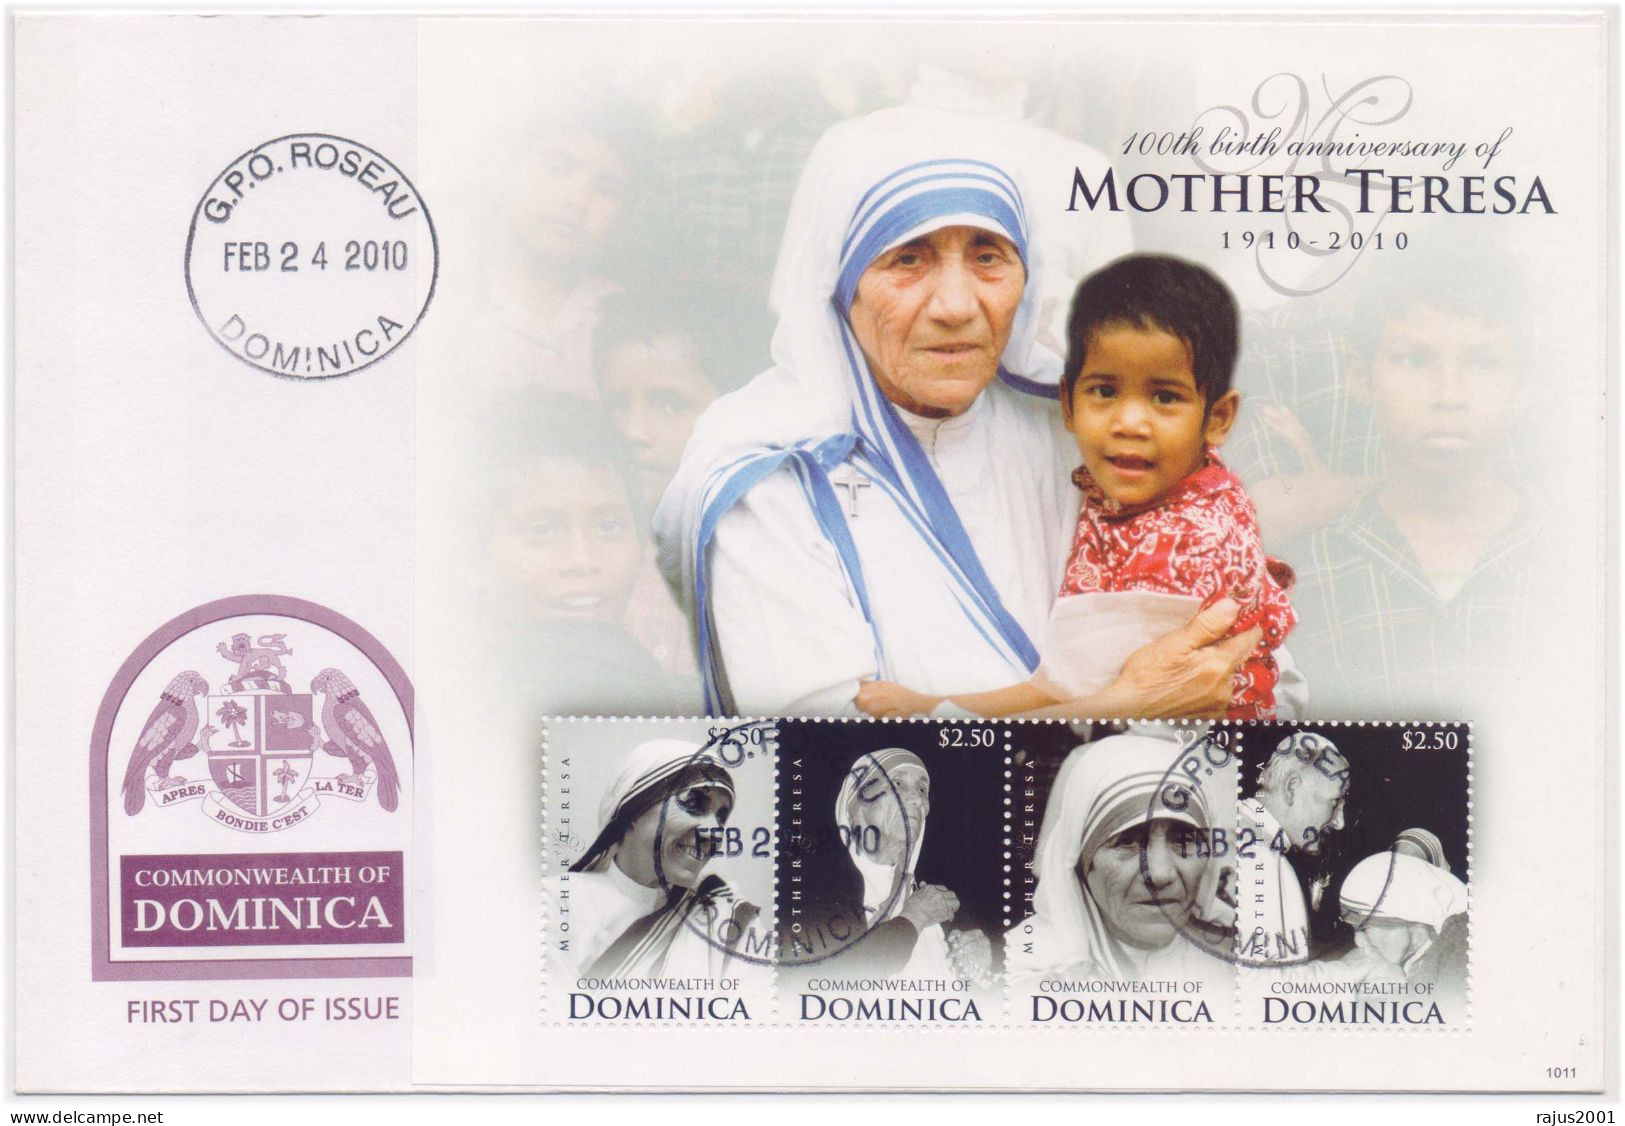 Mother Teresa With Child, Saint, Religion, Peace, Nobel Prize, Famous Women, Dominica Souvenir Sheet FDC - Mutter Teresa